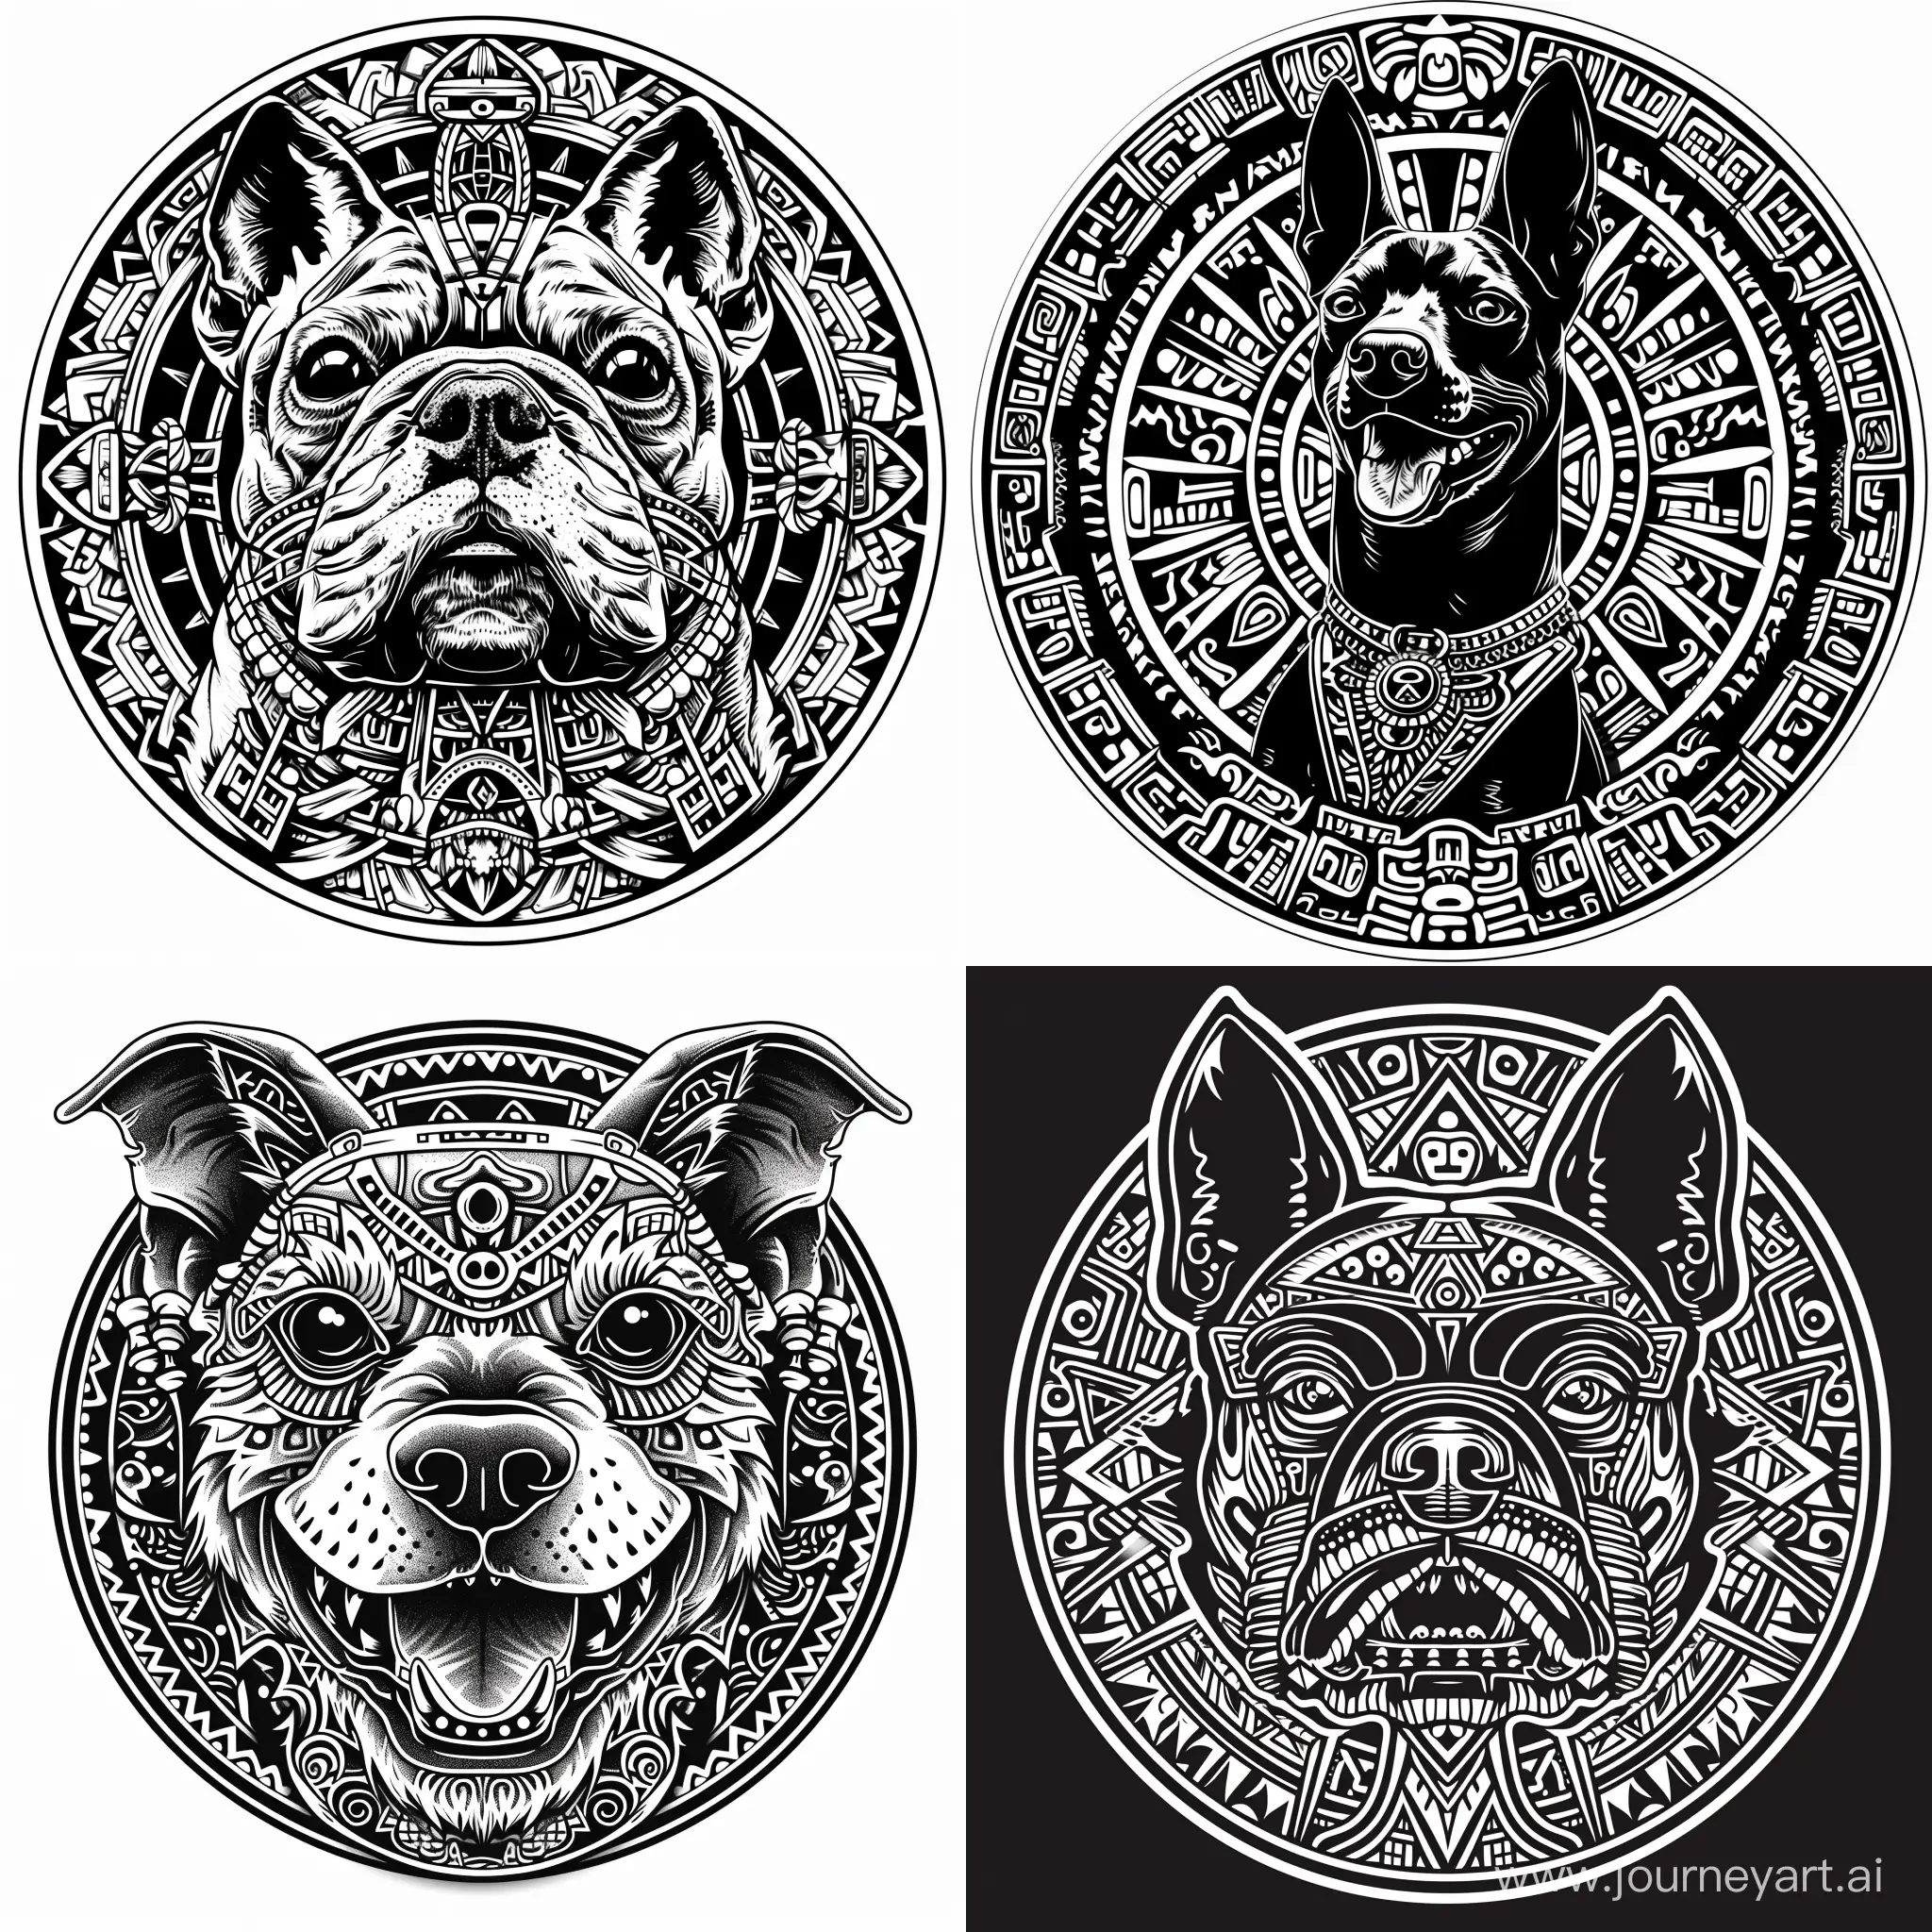 Mayan-and-Aztec-Inspired-Dog-Medallion-Minimalistic-22x36-mm-Artwork